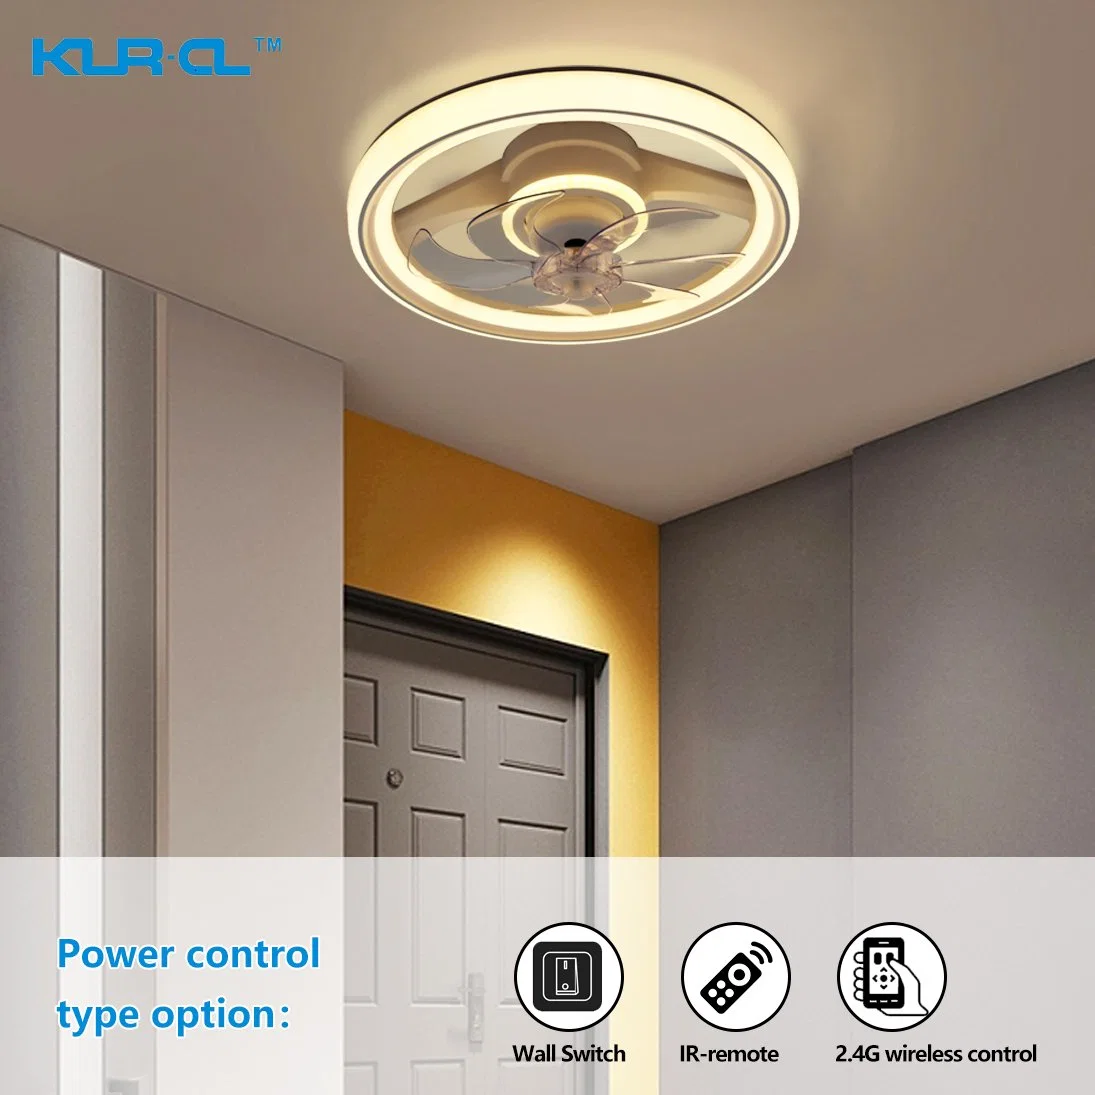 Flush Mounted Silent 2.4G Wireless Control LED Interior Lighting Fan